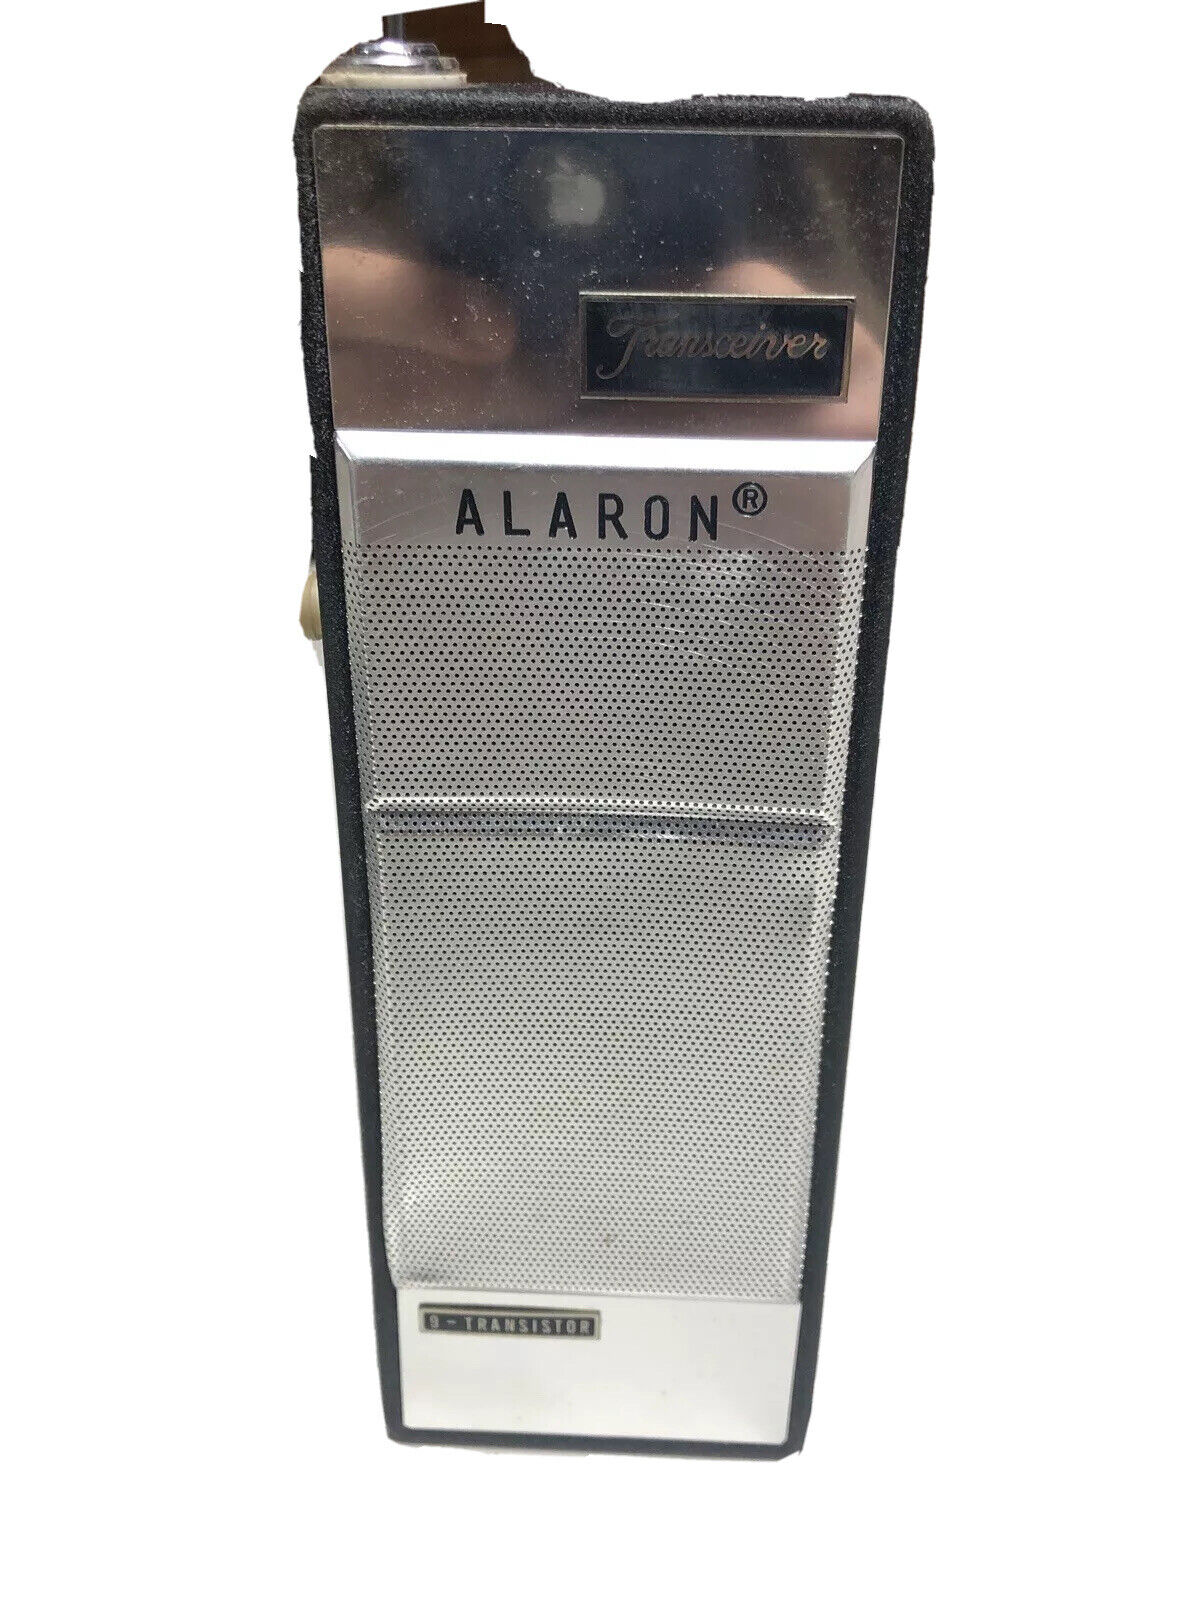 Vintage Alaron Transceiver W/ Leather Case